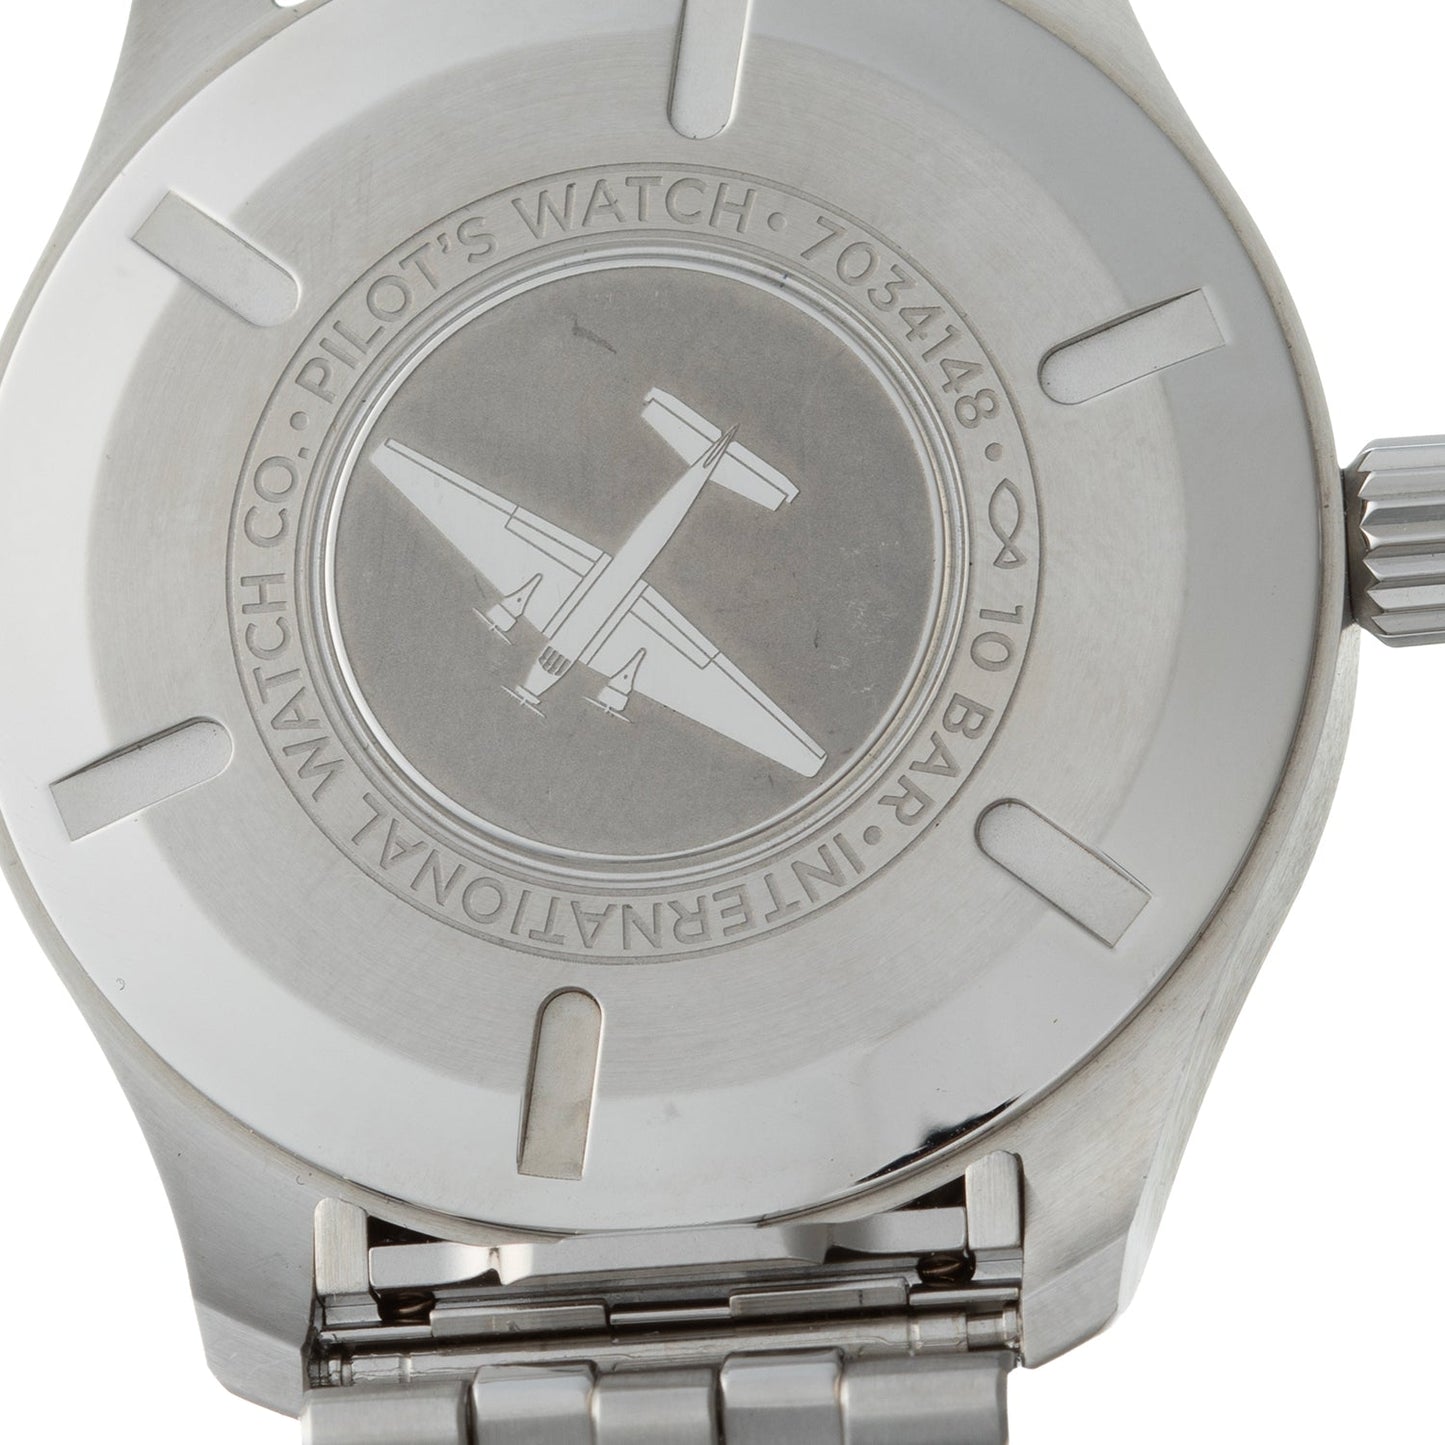 IWC Schaffhausen - Pilot's Watch Mark XX Steel (IW328206)